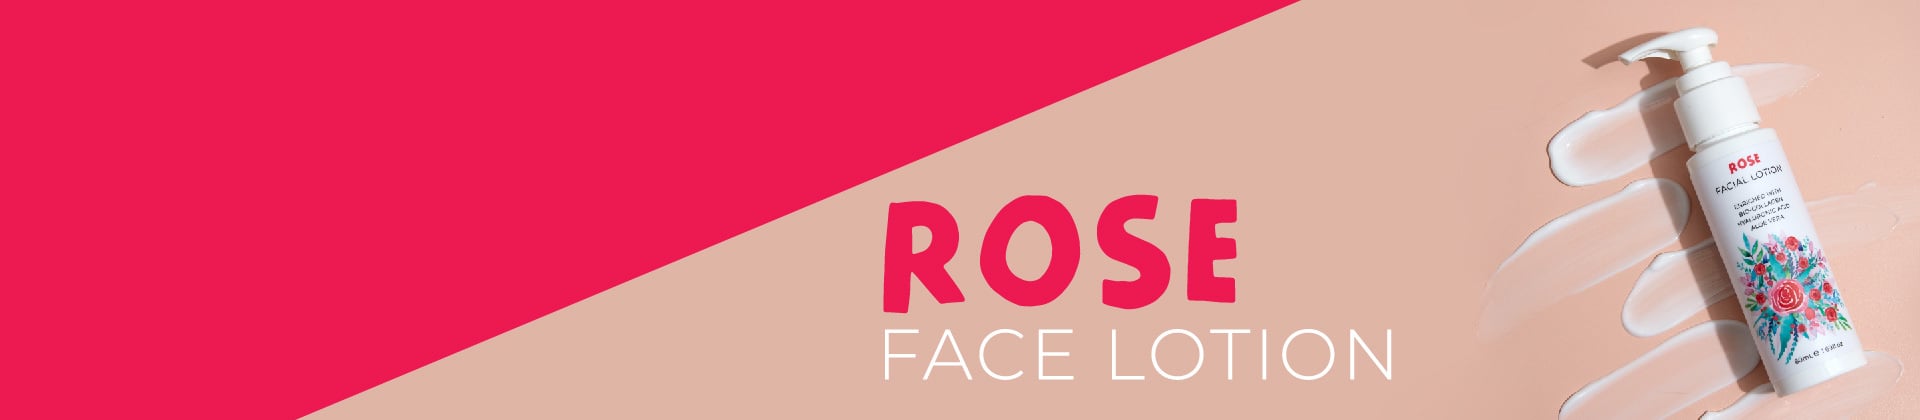 Face Lotion - Rose Range Skincare